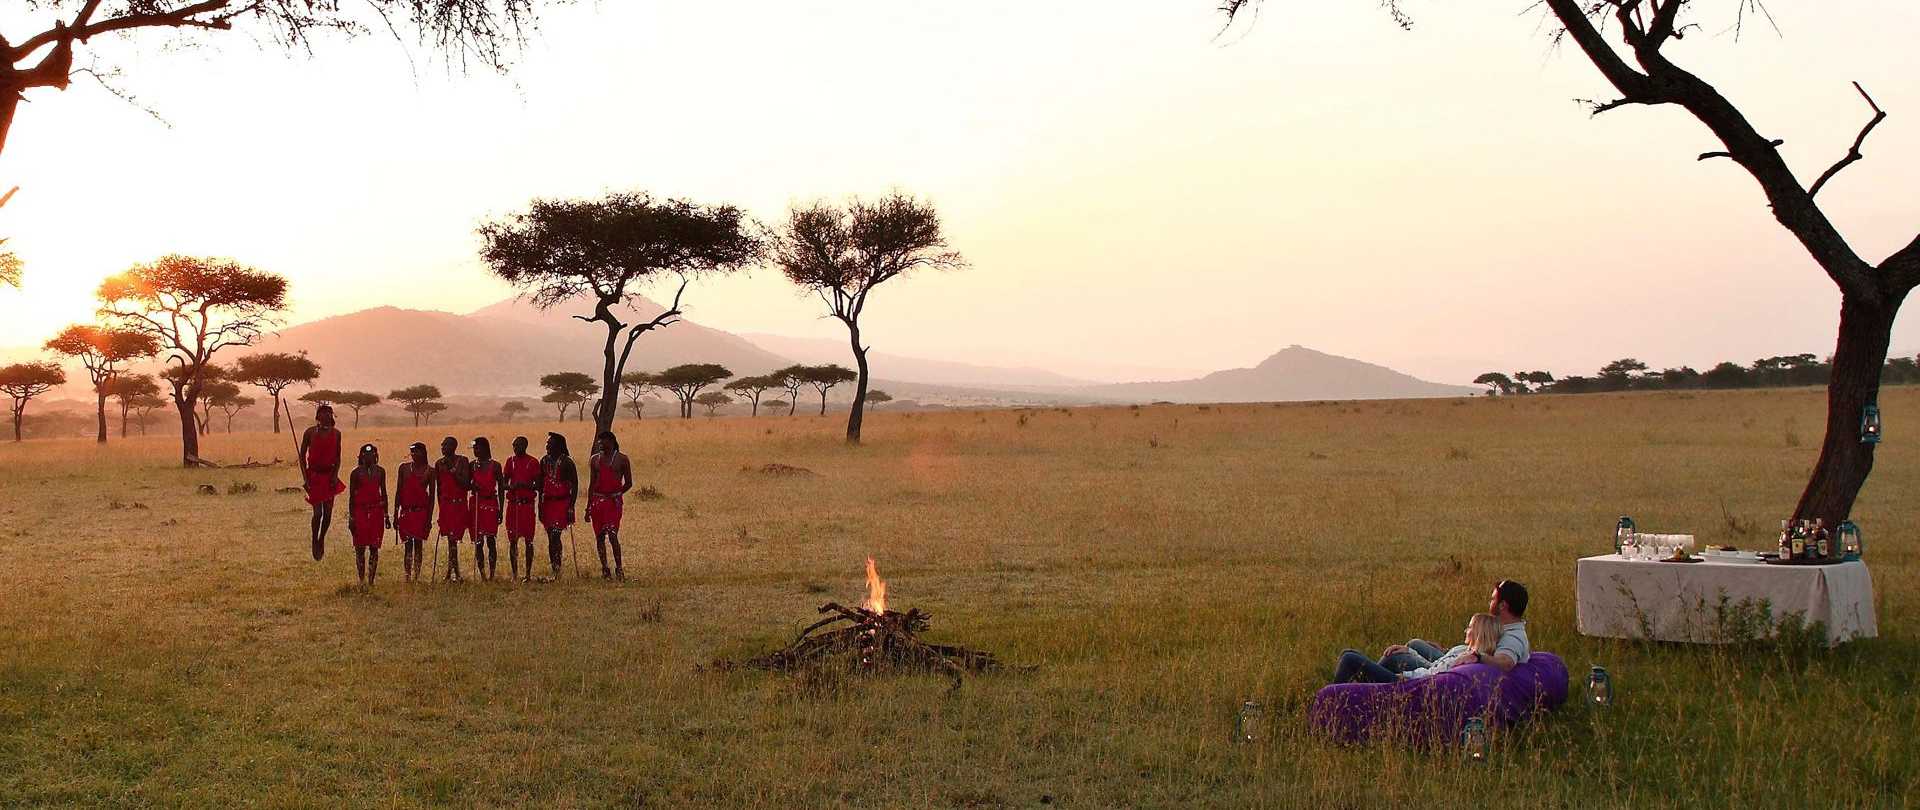 Klein's Camp (Northern Serengeti National Park) Tanzania - www.photo-safaris.com